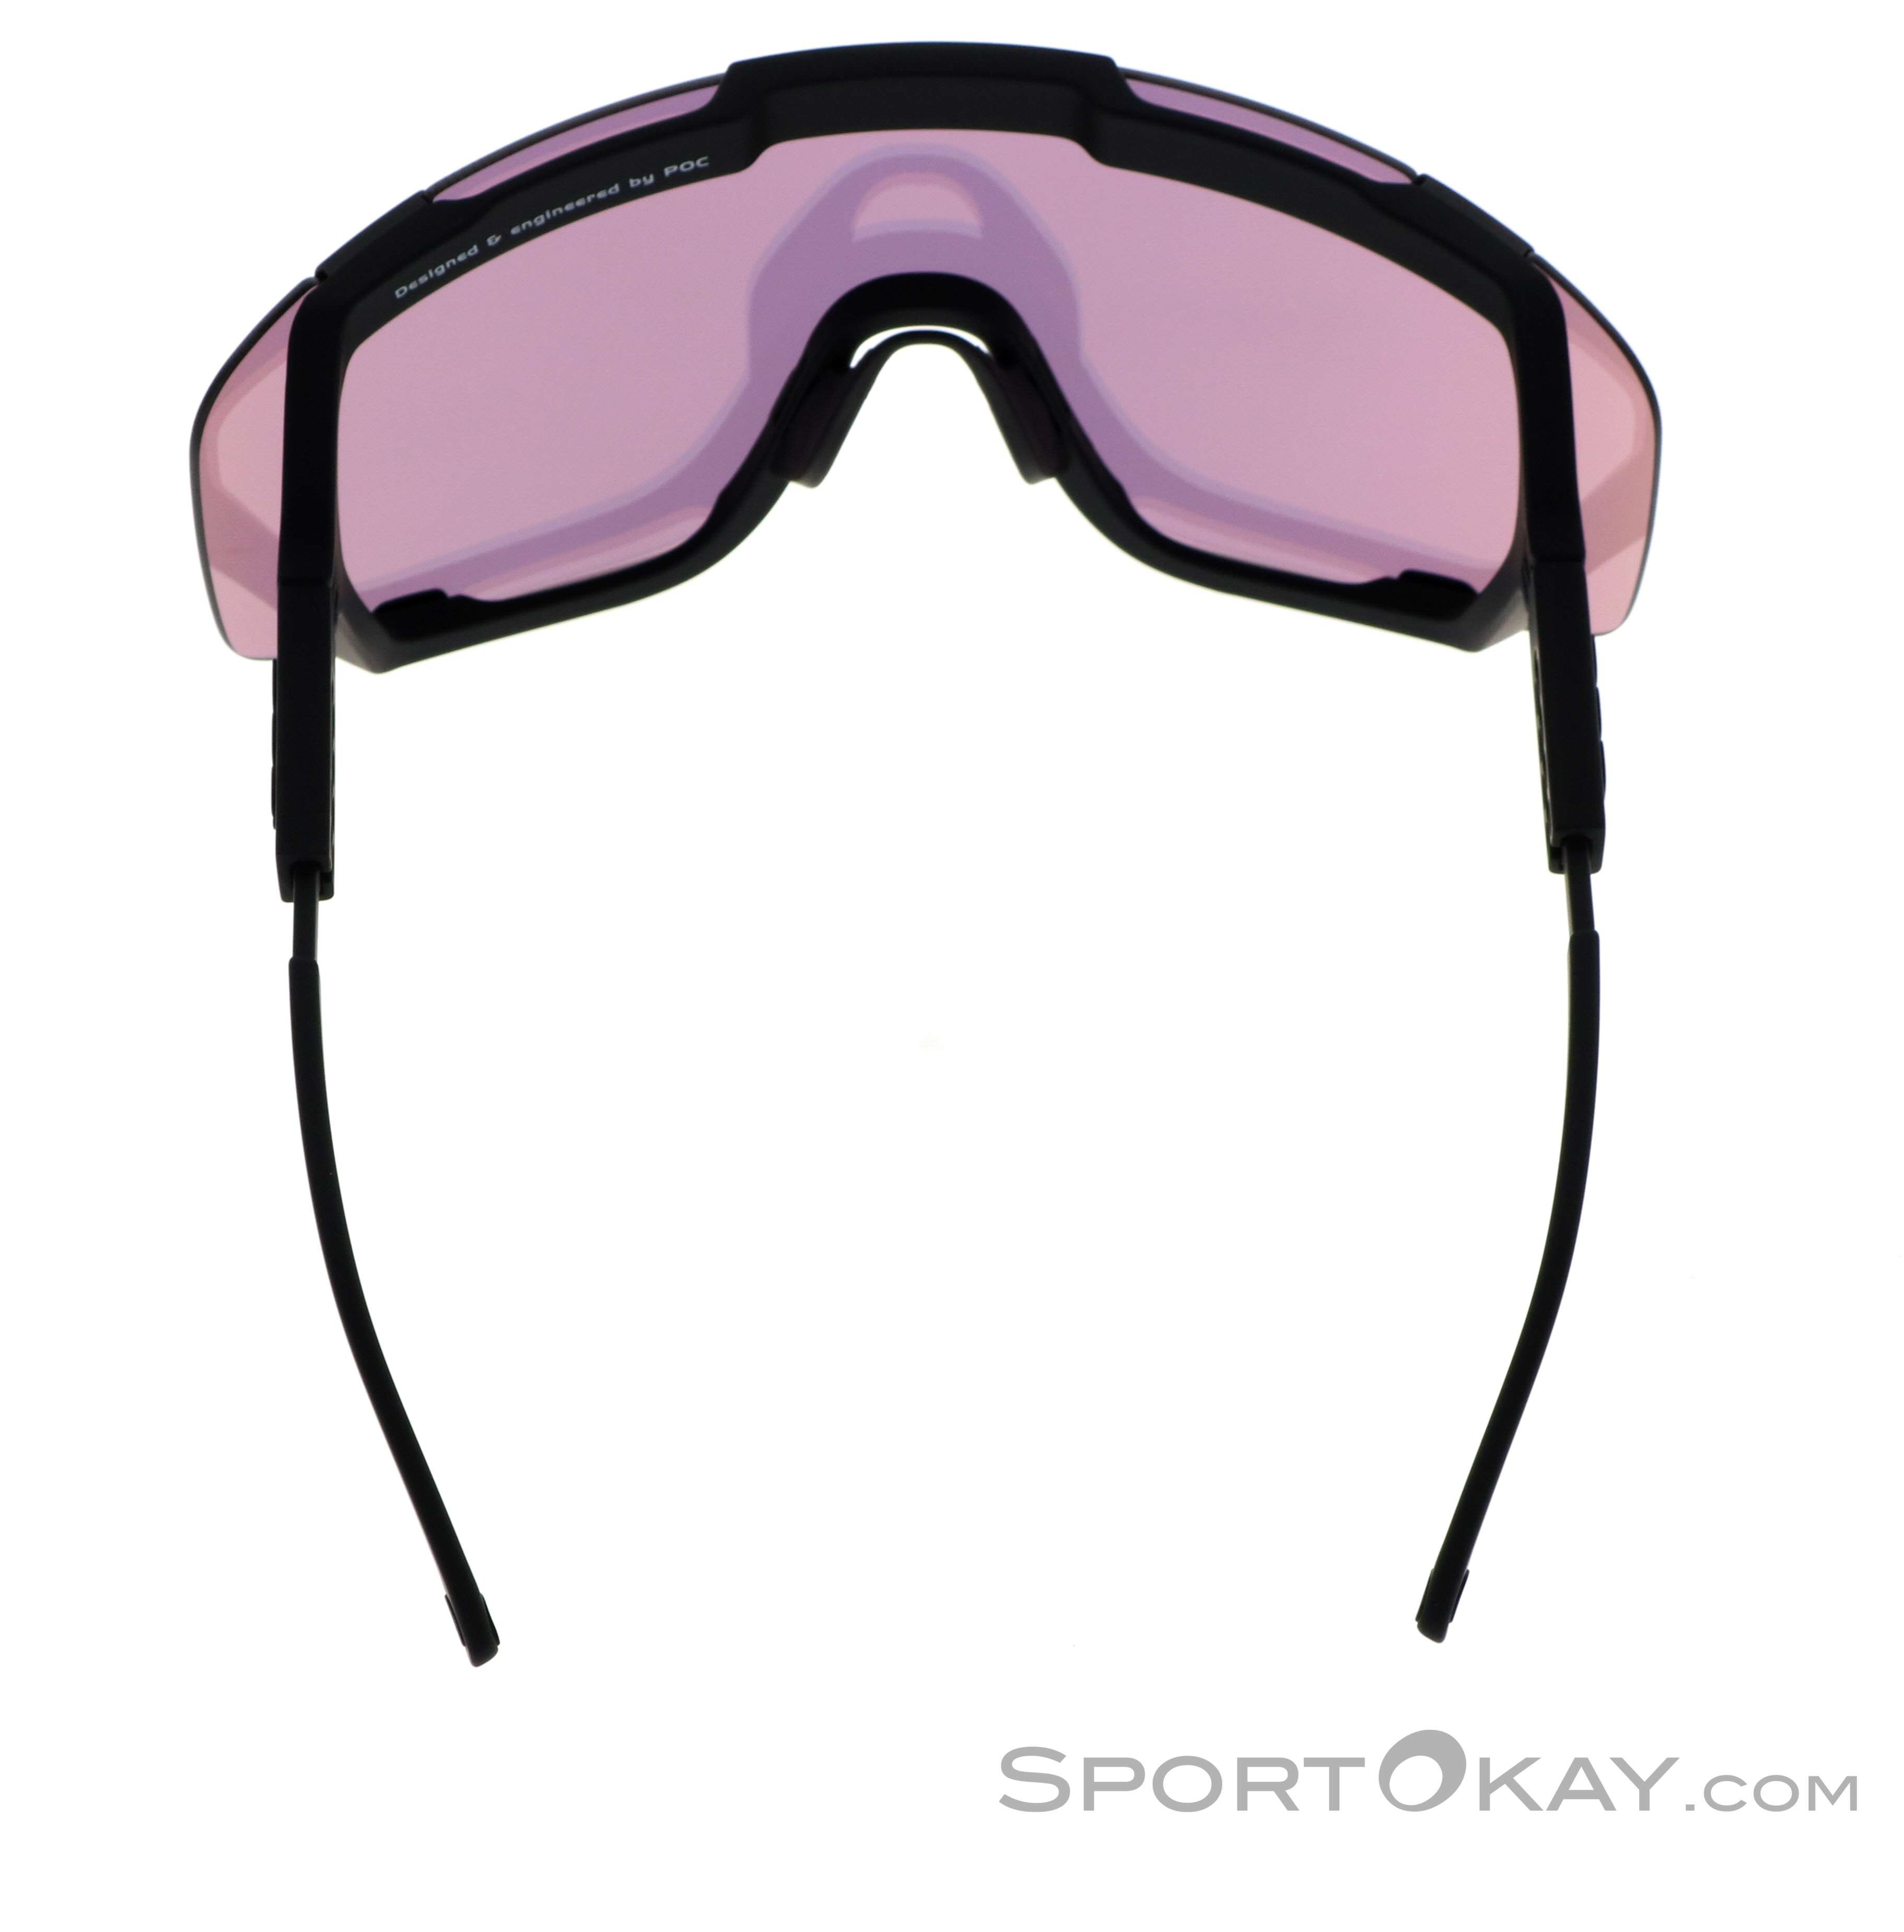 Scott Pro Shield S3 (VLT 16%) - Cycling glasses, Free EU Delivery